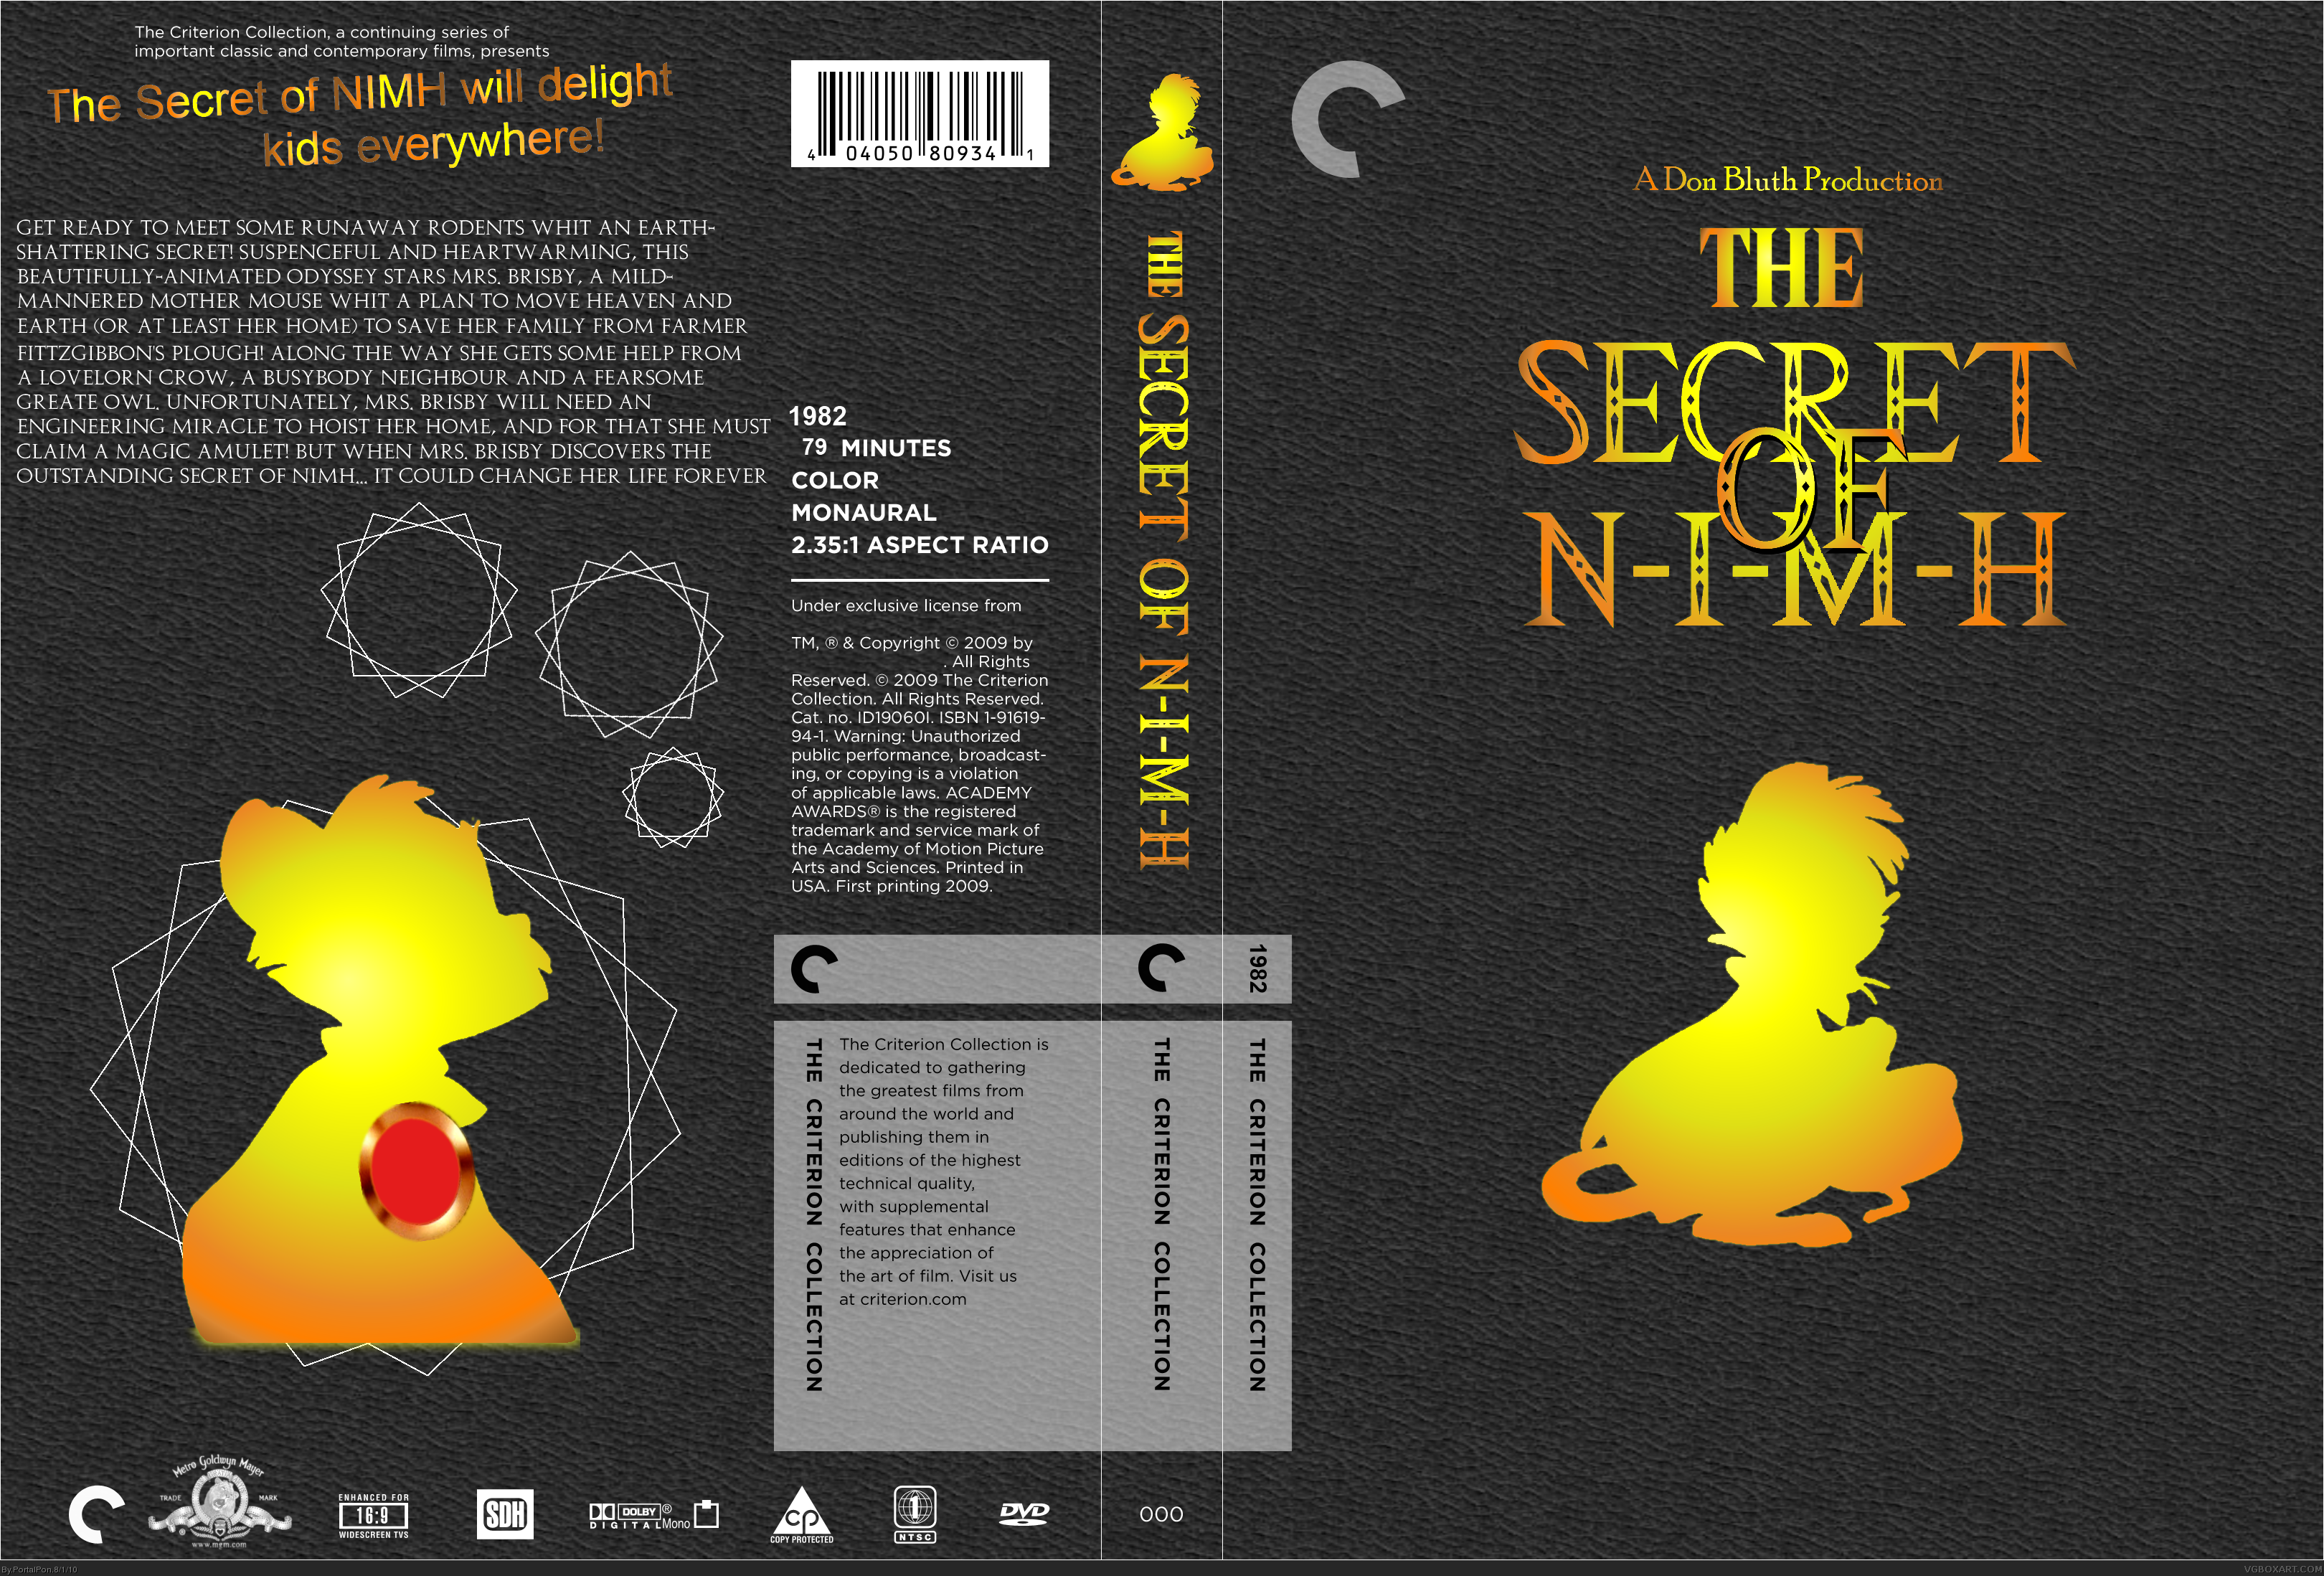 The Secret of N-I-M-H box cover